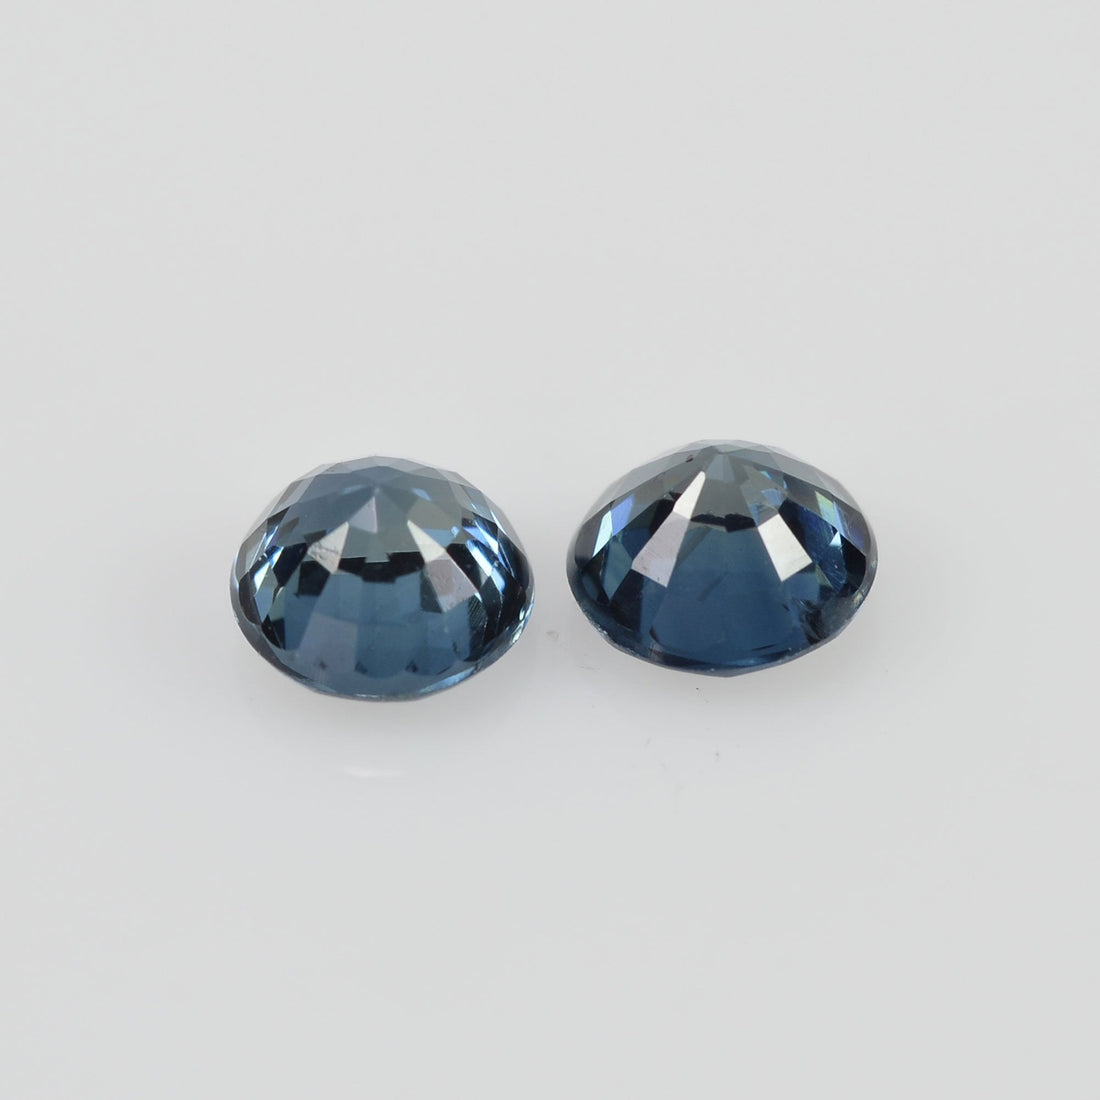 4.3 mm Natural Blue Sapphire Loose Pair Gemstone Round Cut - Thai Gems Export Ltd.